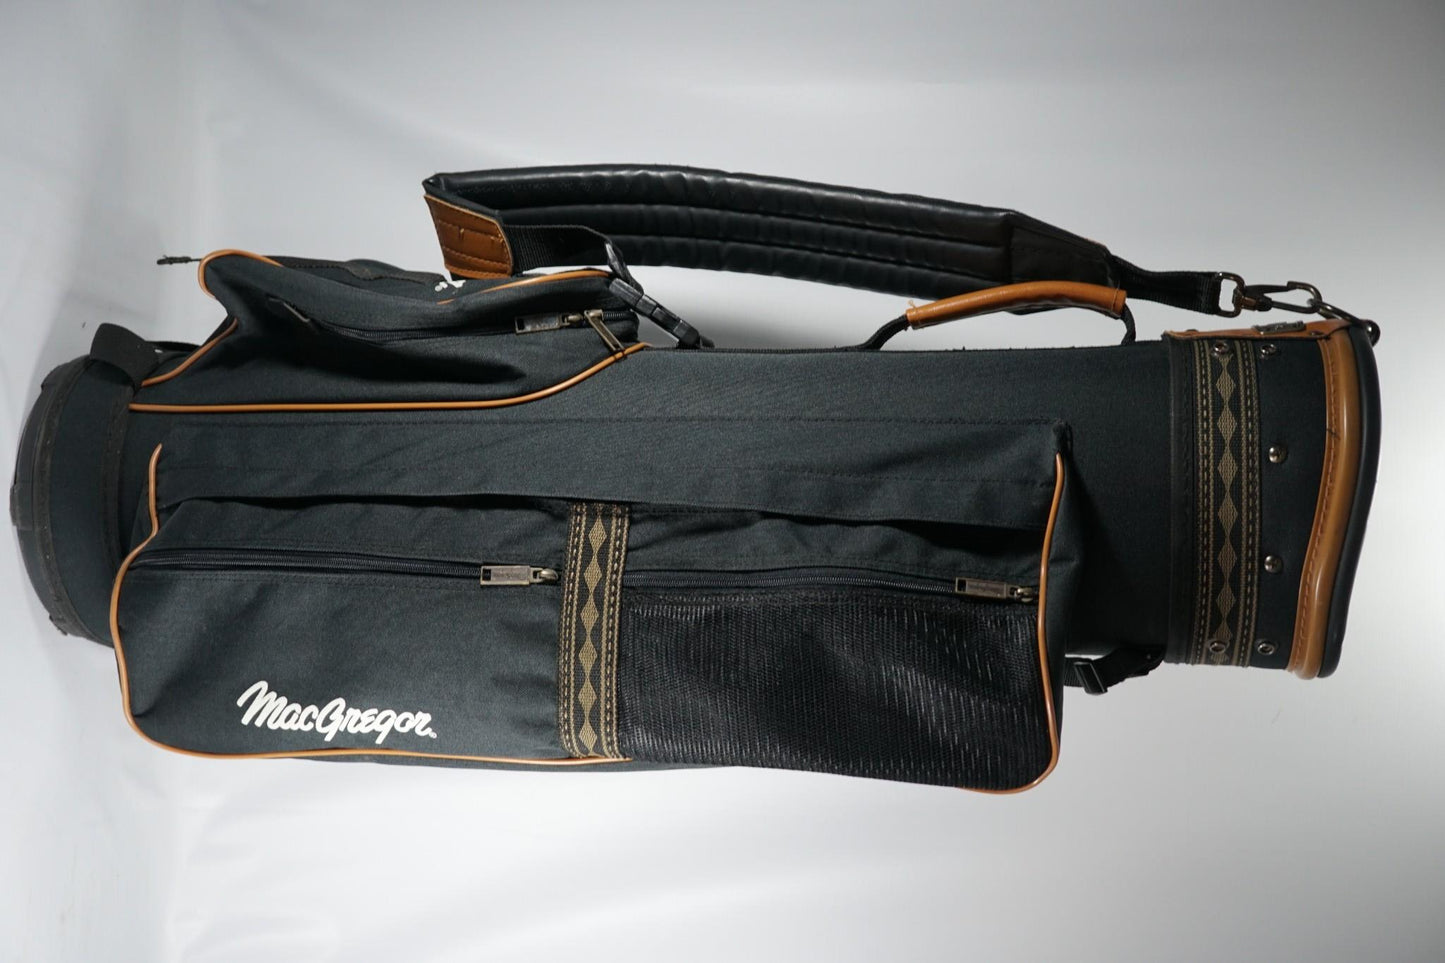 MacGregor Cart Bag / Black and Brown / With Rainhood